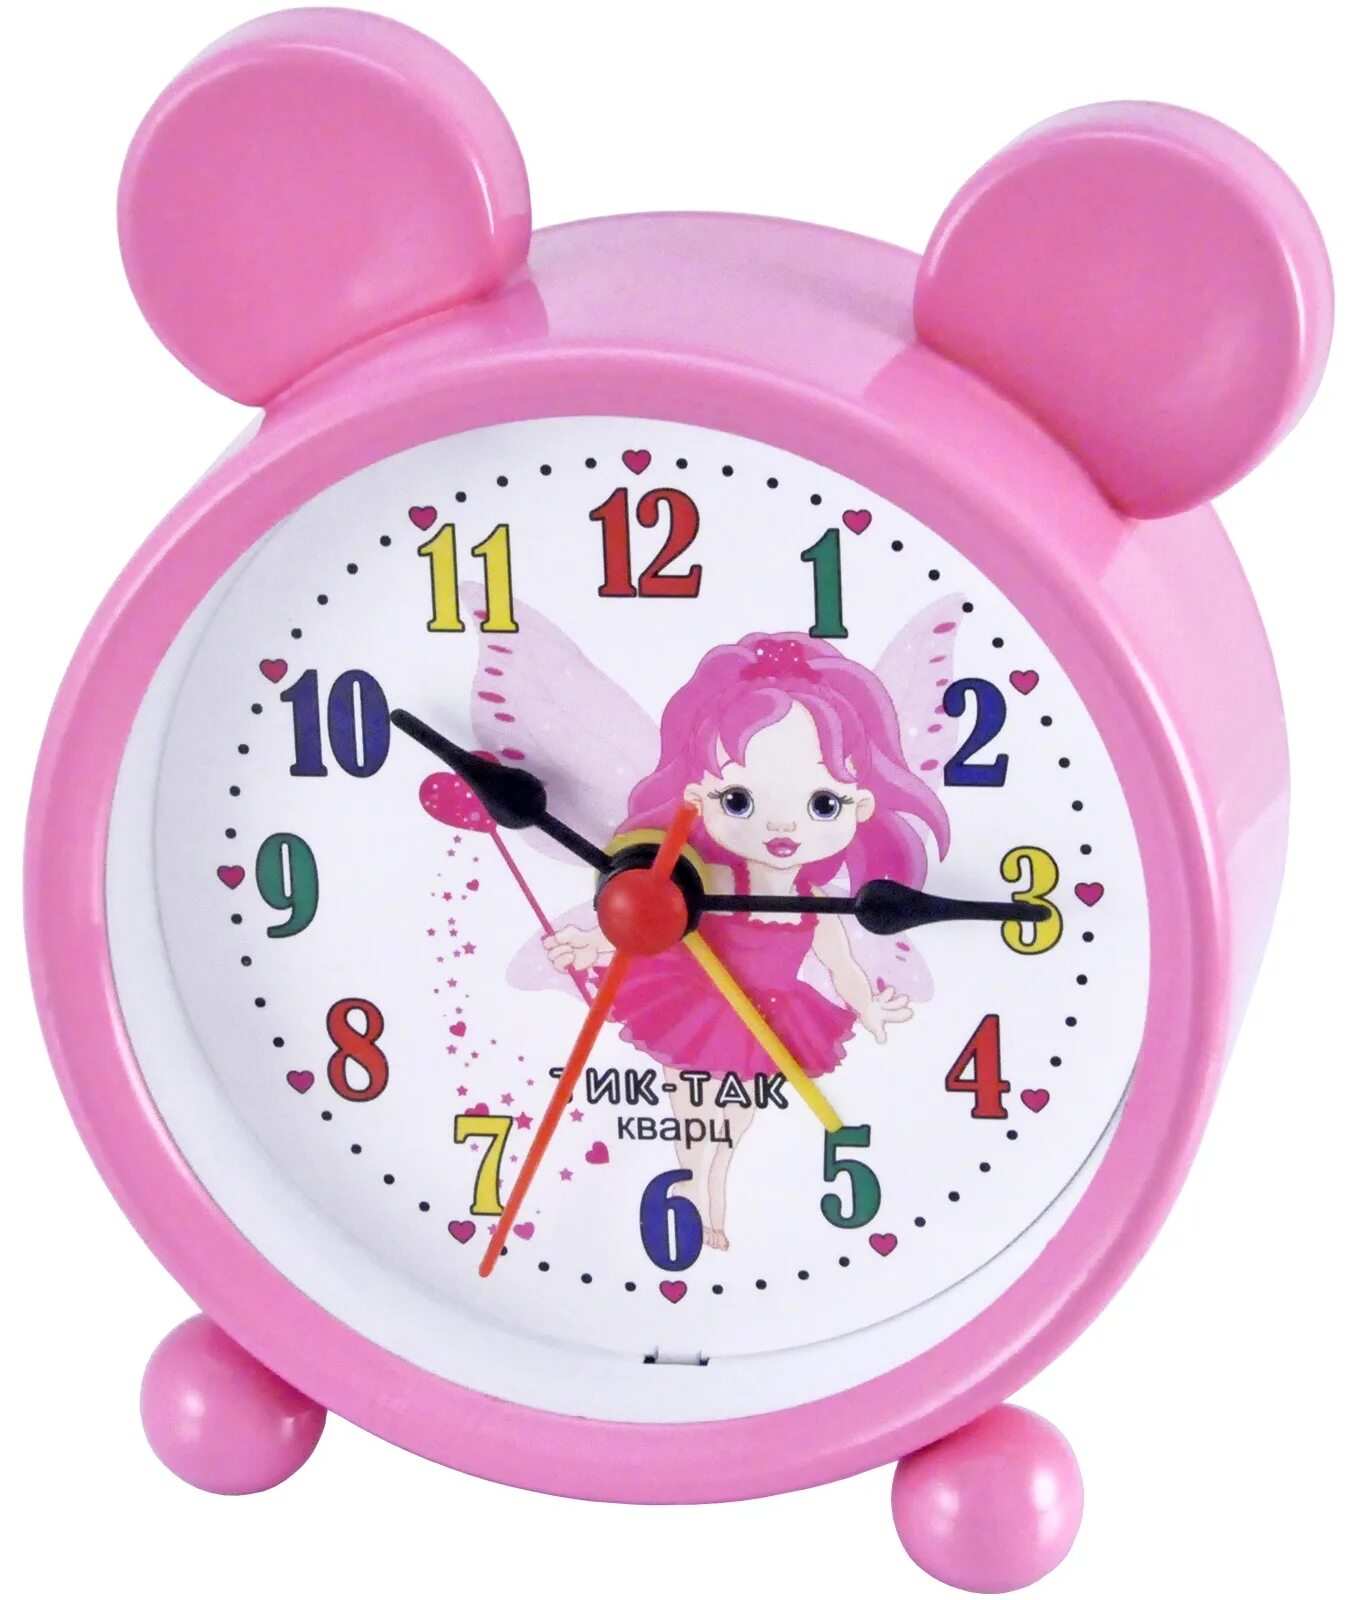 Будильник тик-так б-019. Будильник детский. Часы будильник детские. Часы будильник, розовый.